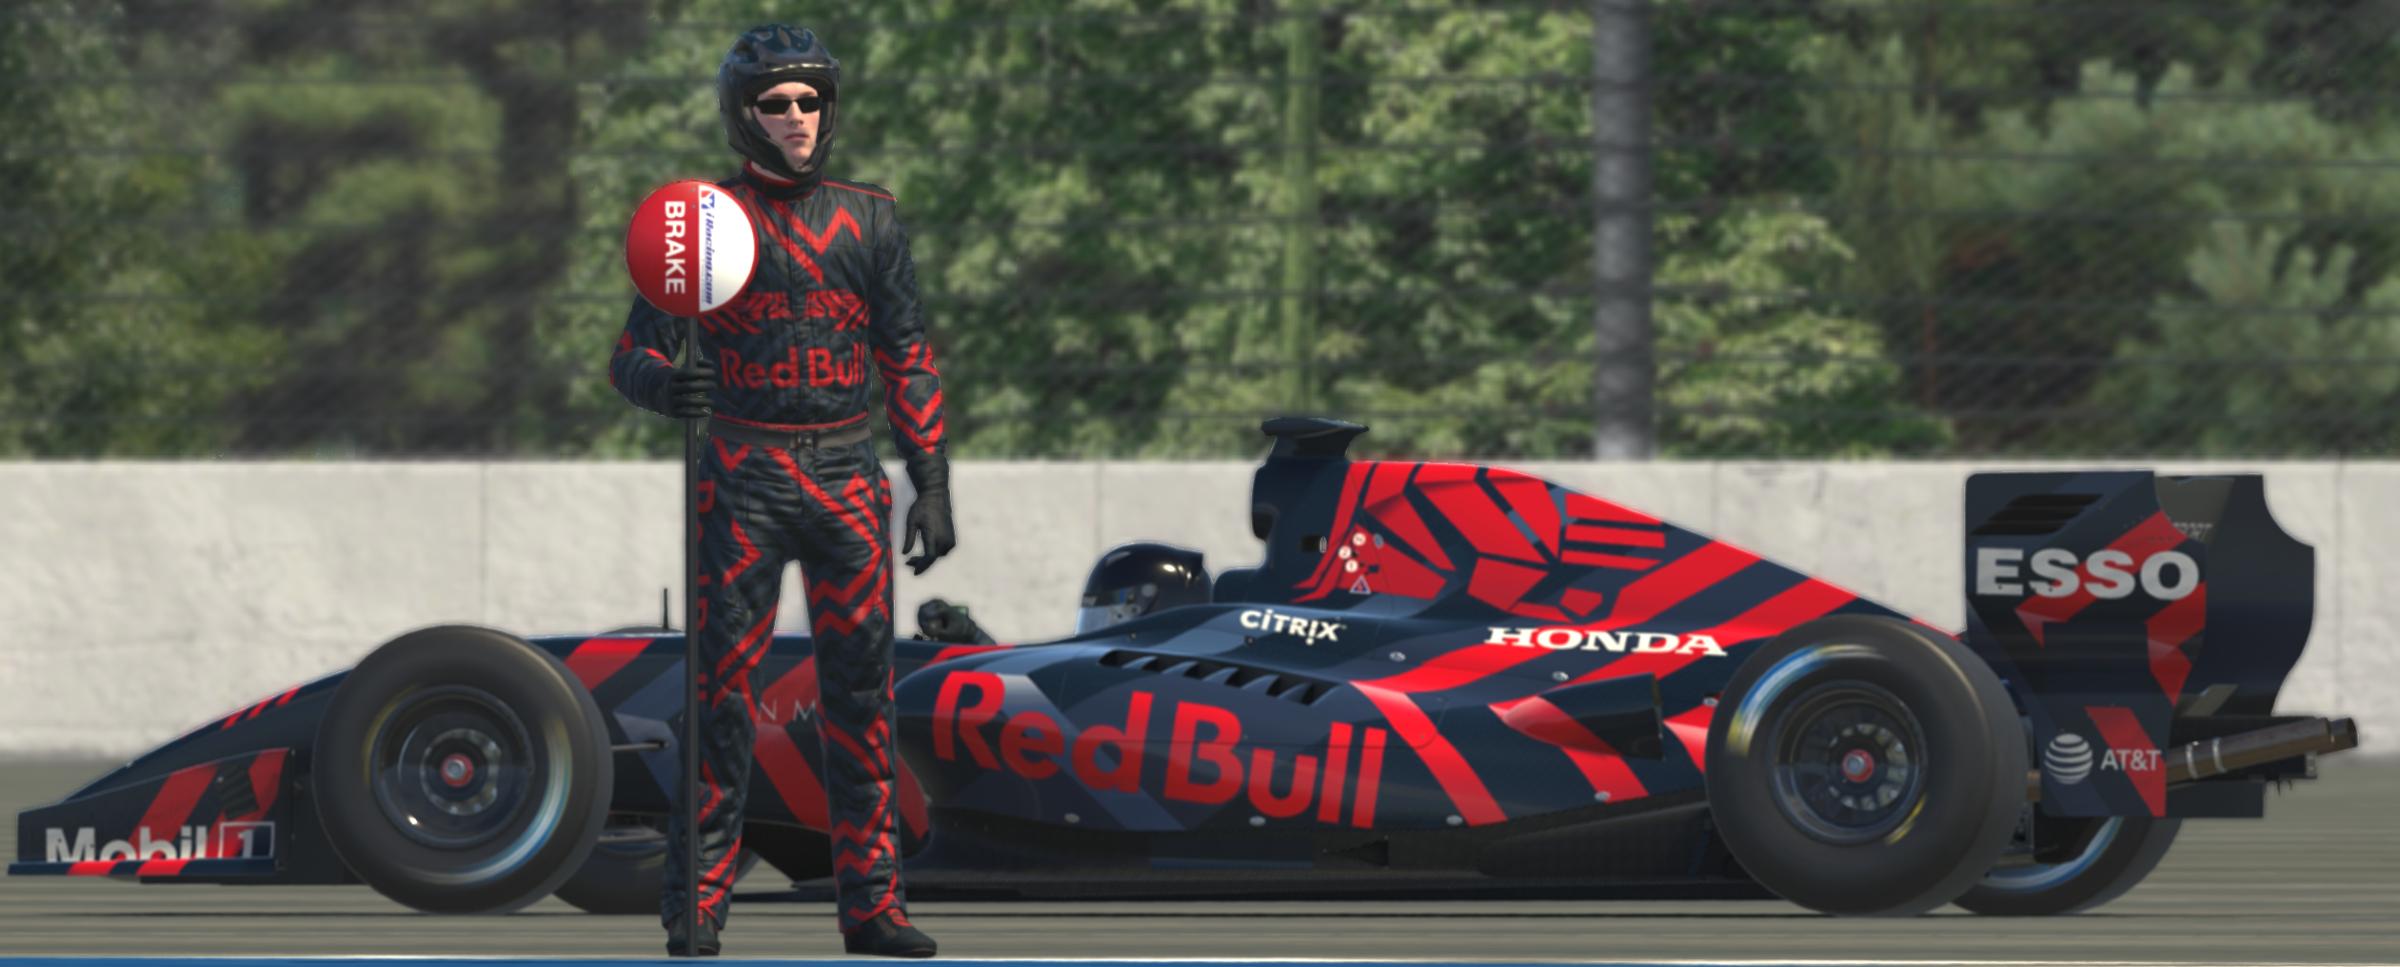 Post your favorite 1st gen RX7 race car livery - RX7Club 